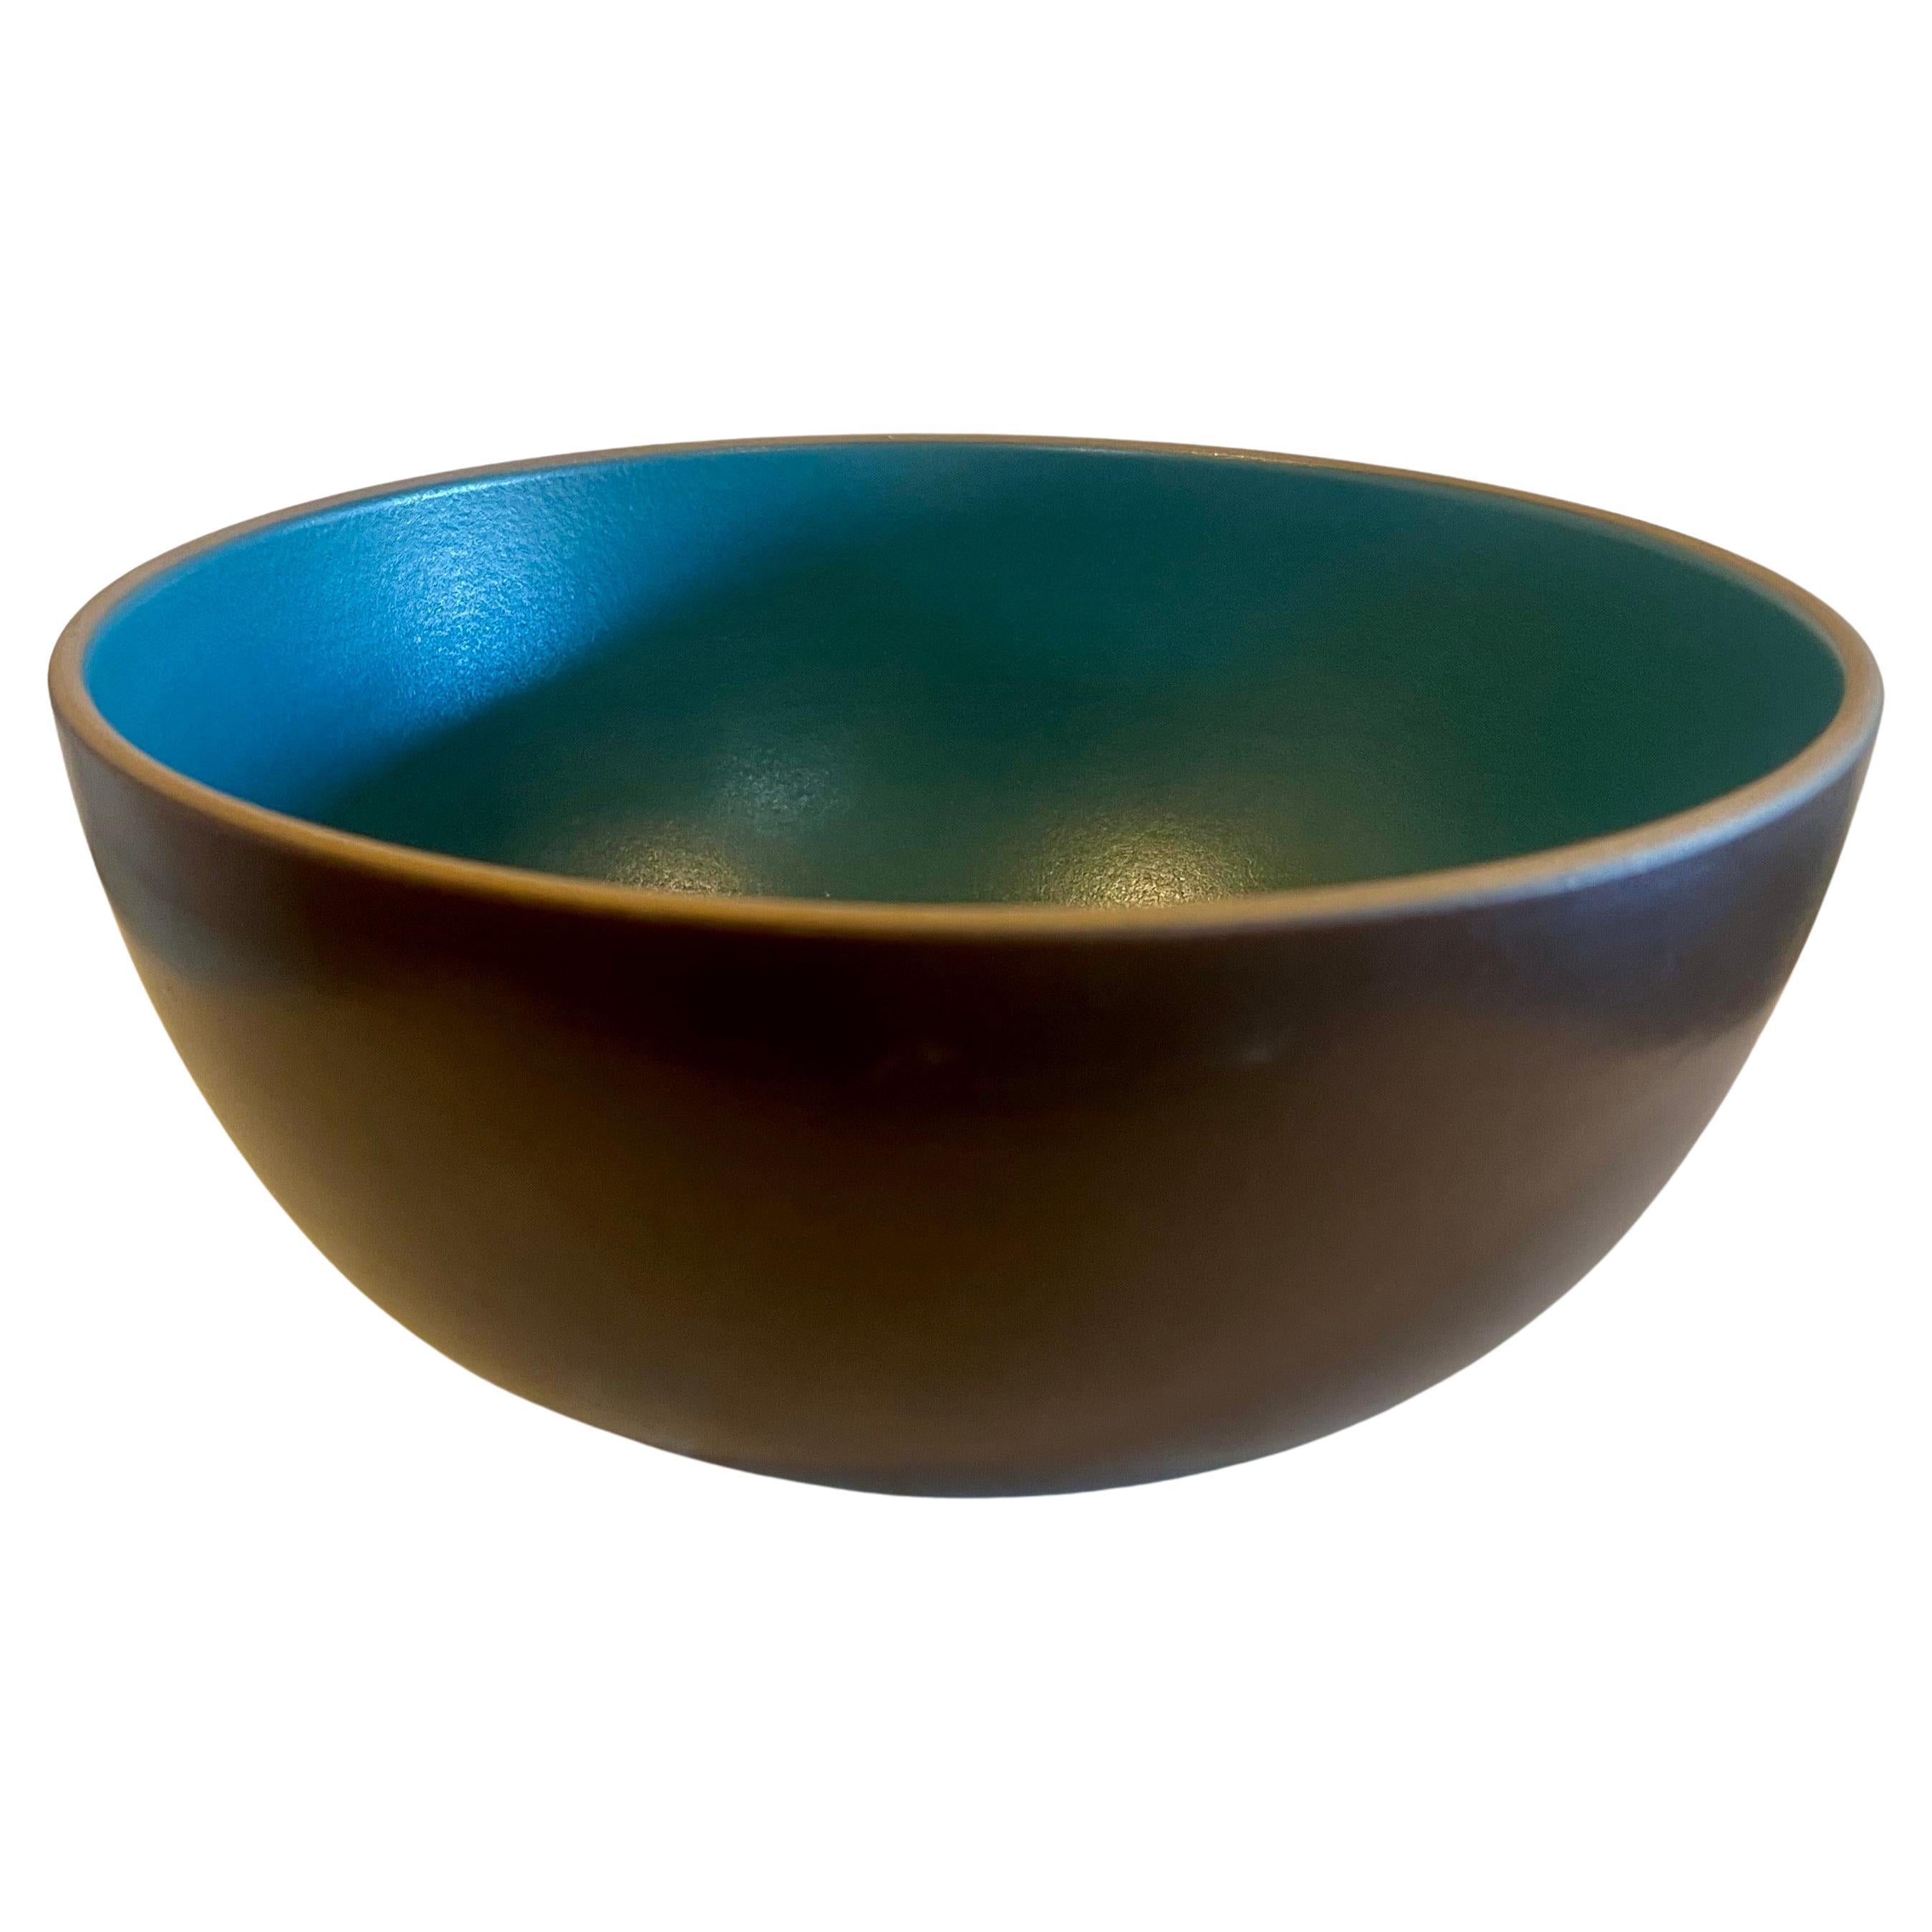 Mid-Century Modern Rare 2 Tone Large Bowl by Heath Ceramics California Design